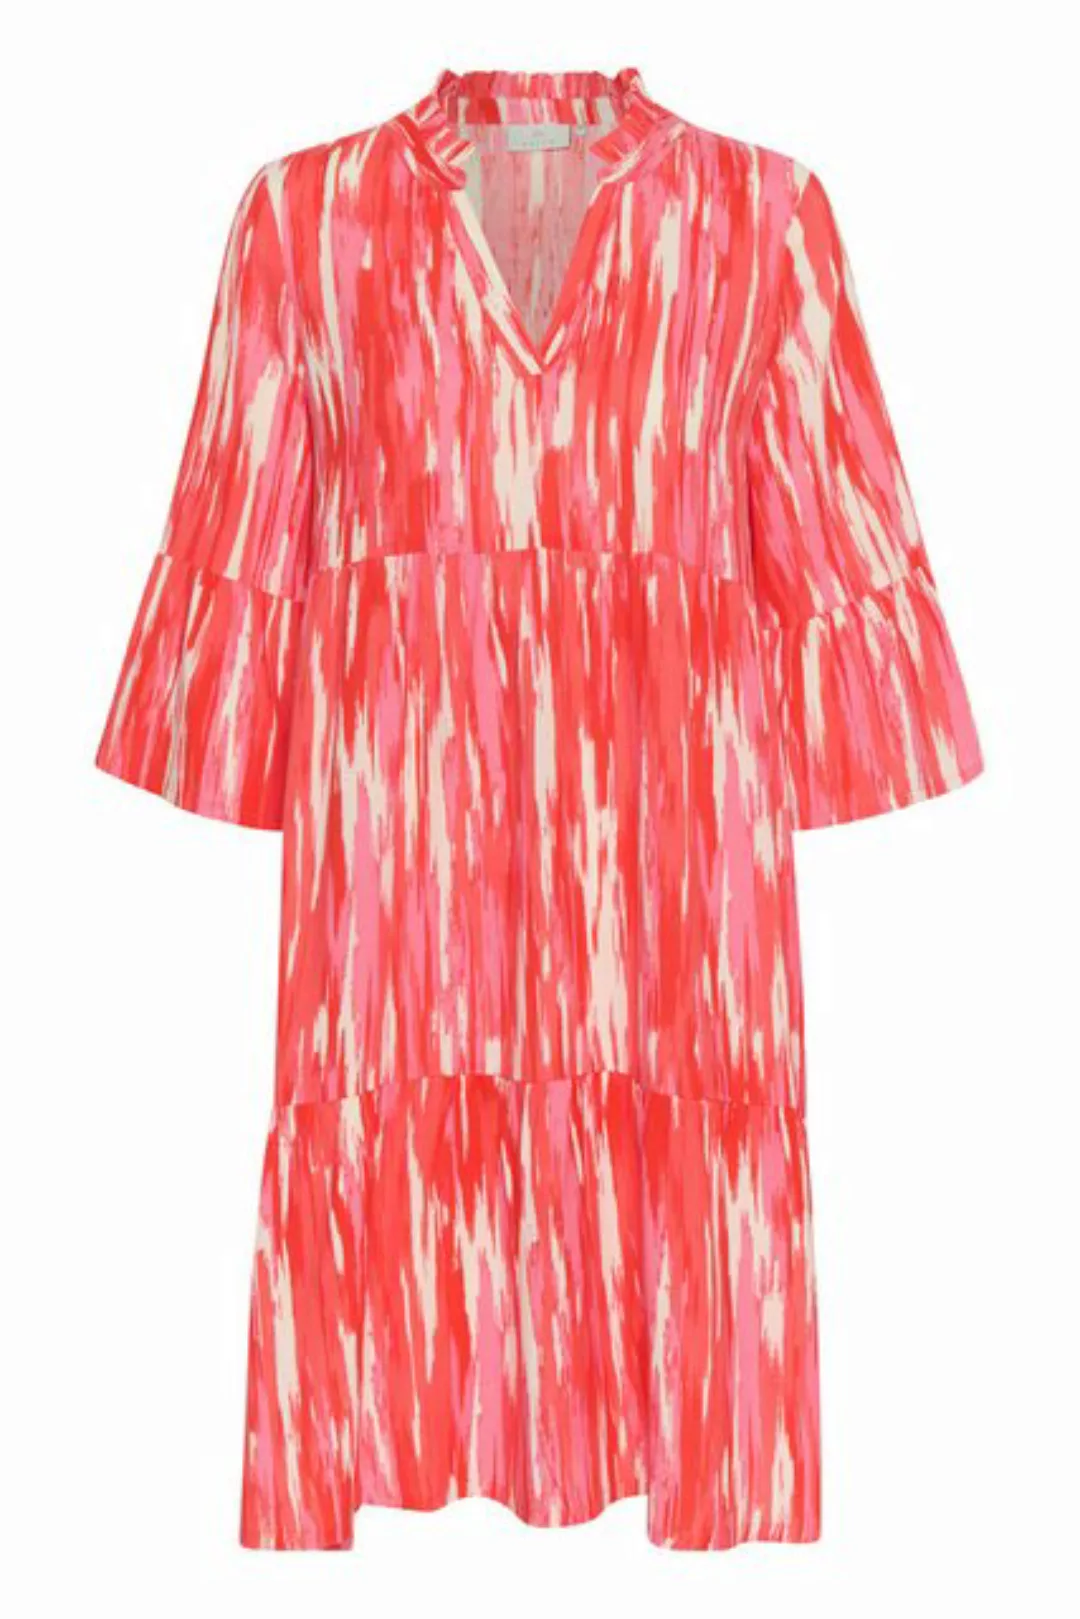 KAFFE Jerseykleid Kleid KAarina günstig online kaufen